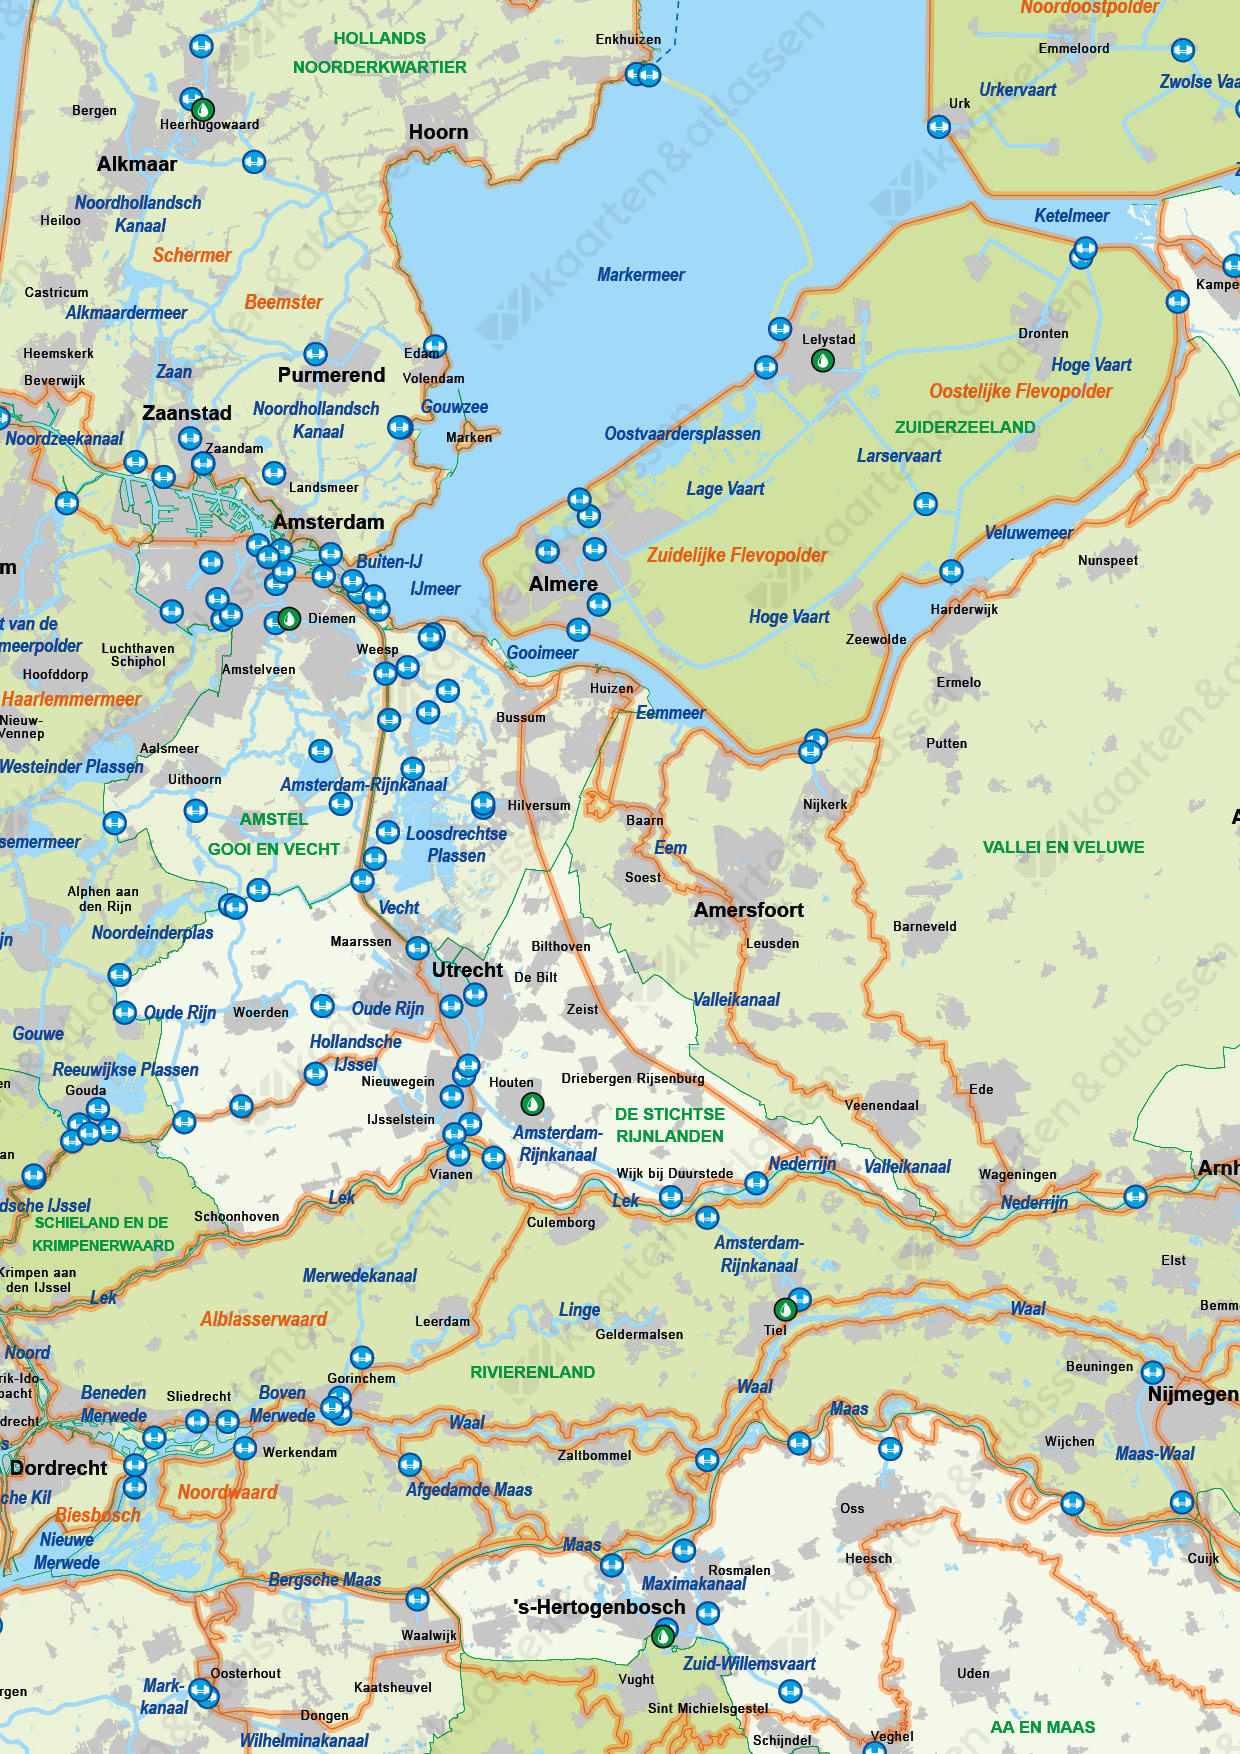 Digitale Waterkaart van Nederland